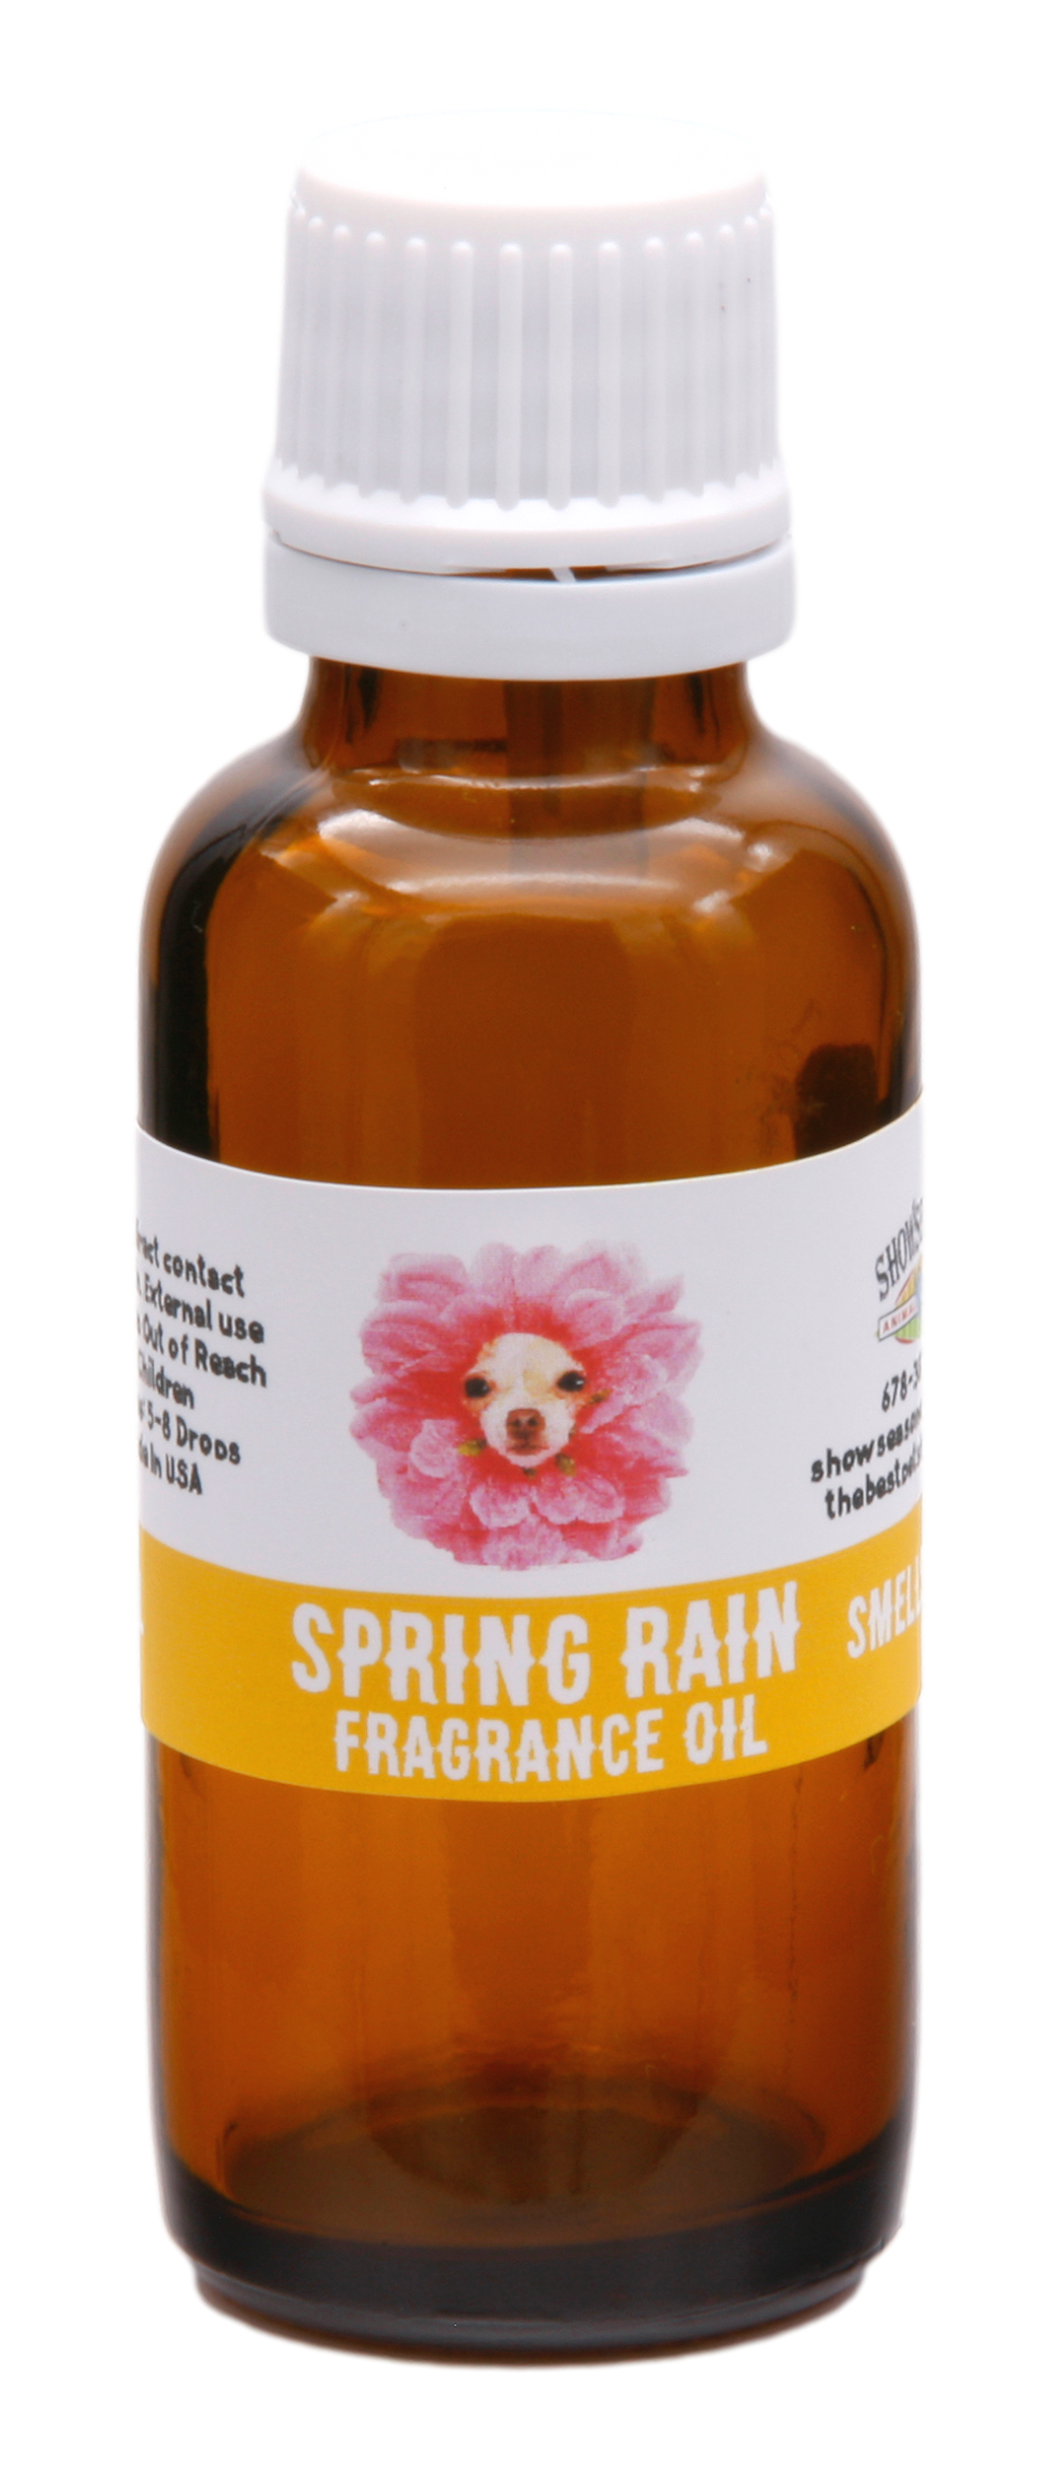 Spring Rain Aromatherapy Fragrance Oil Blend